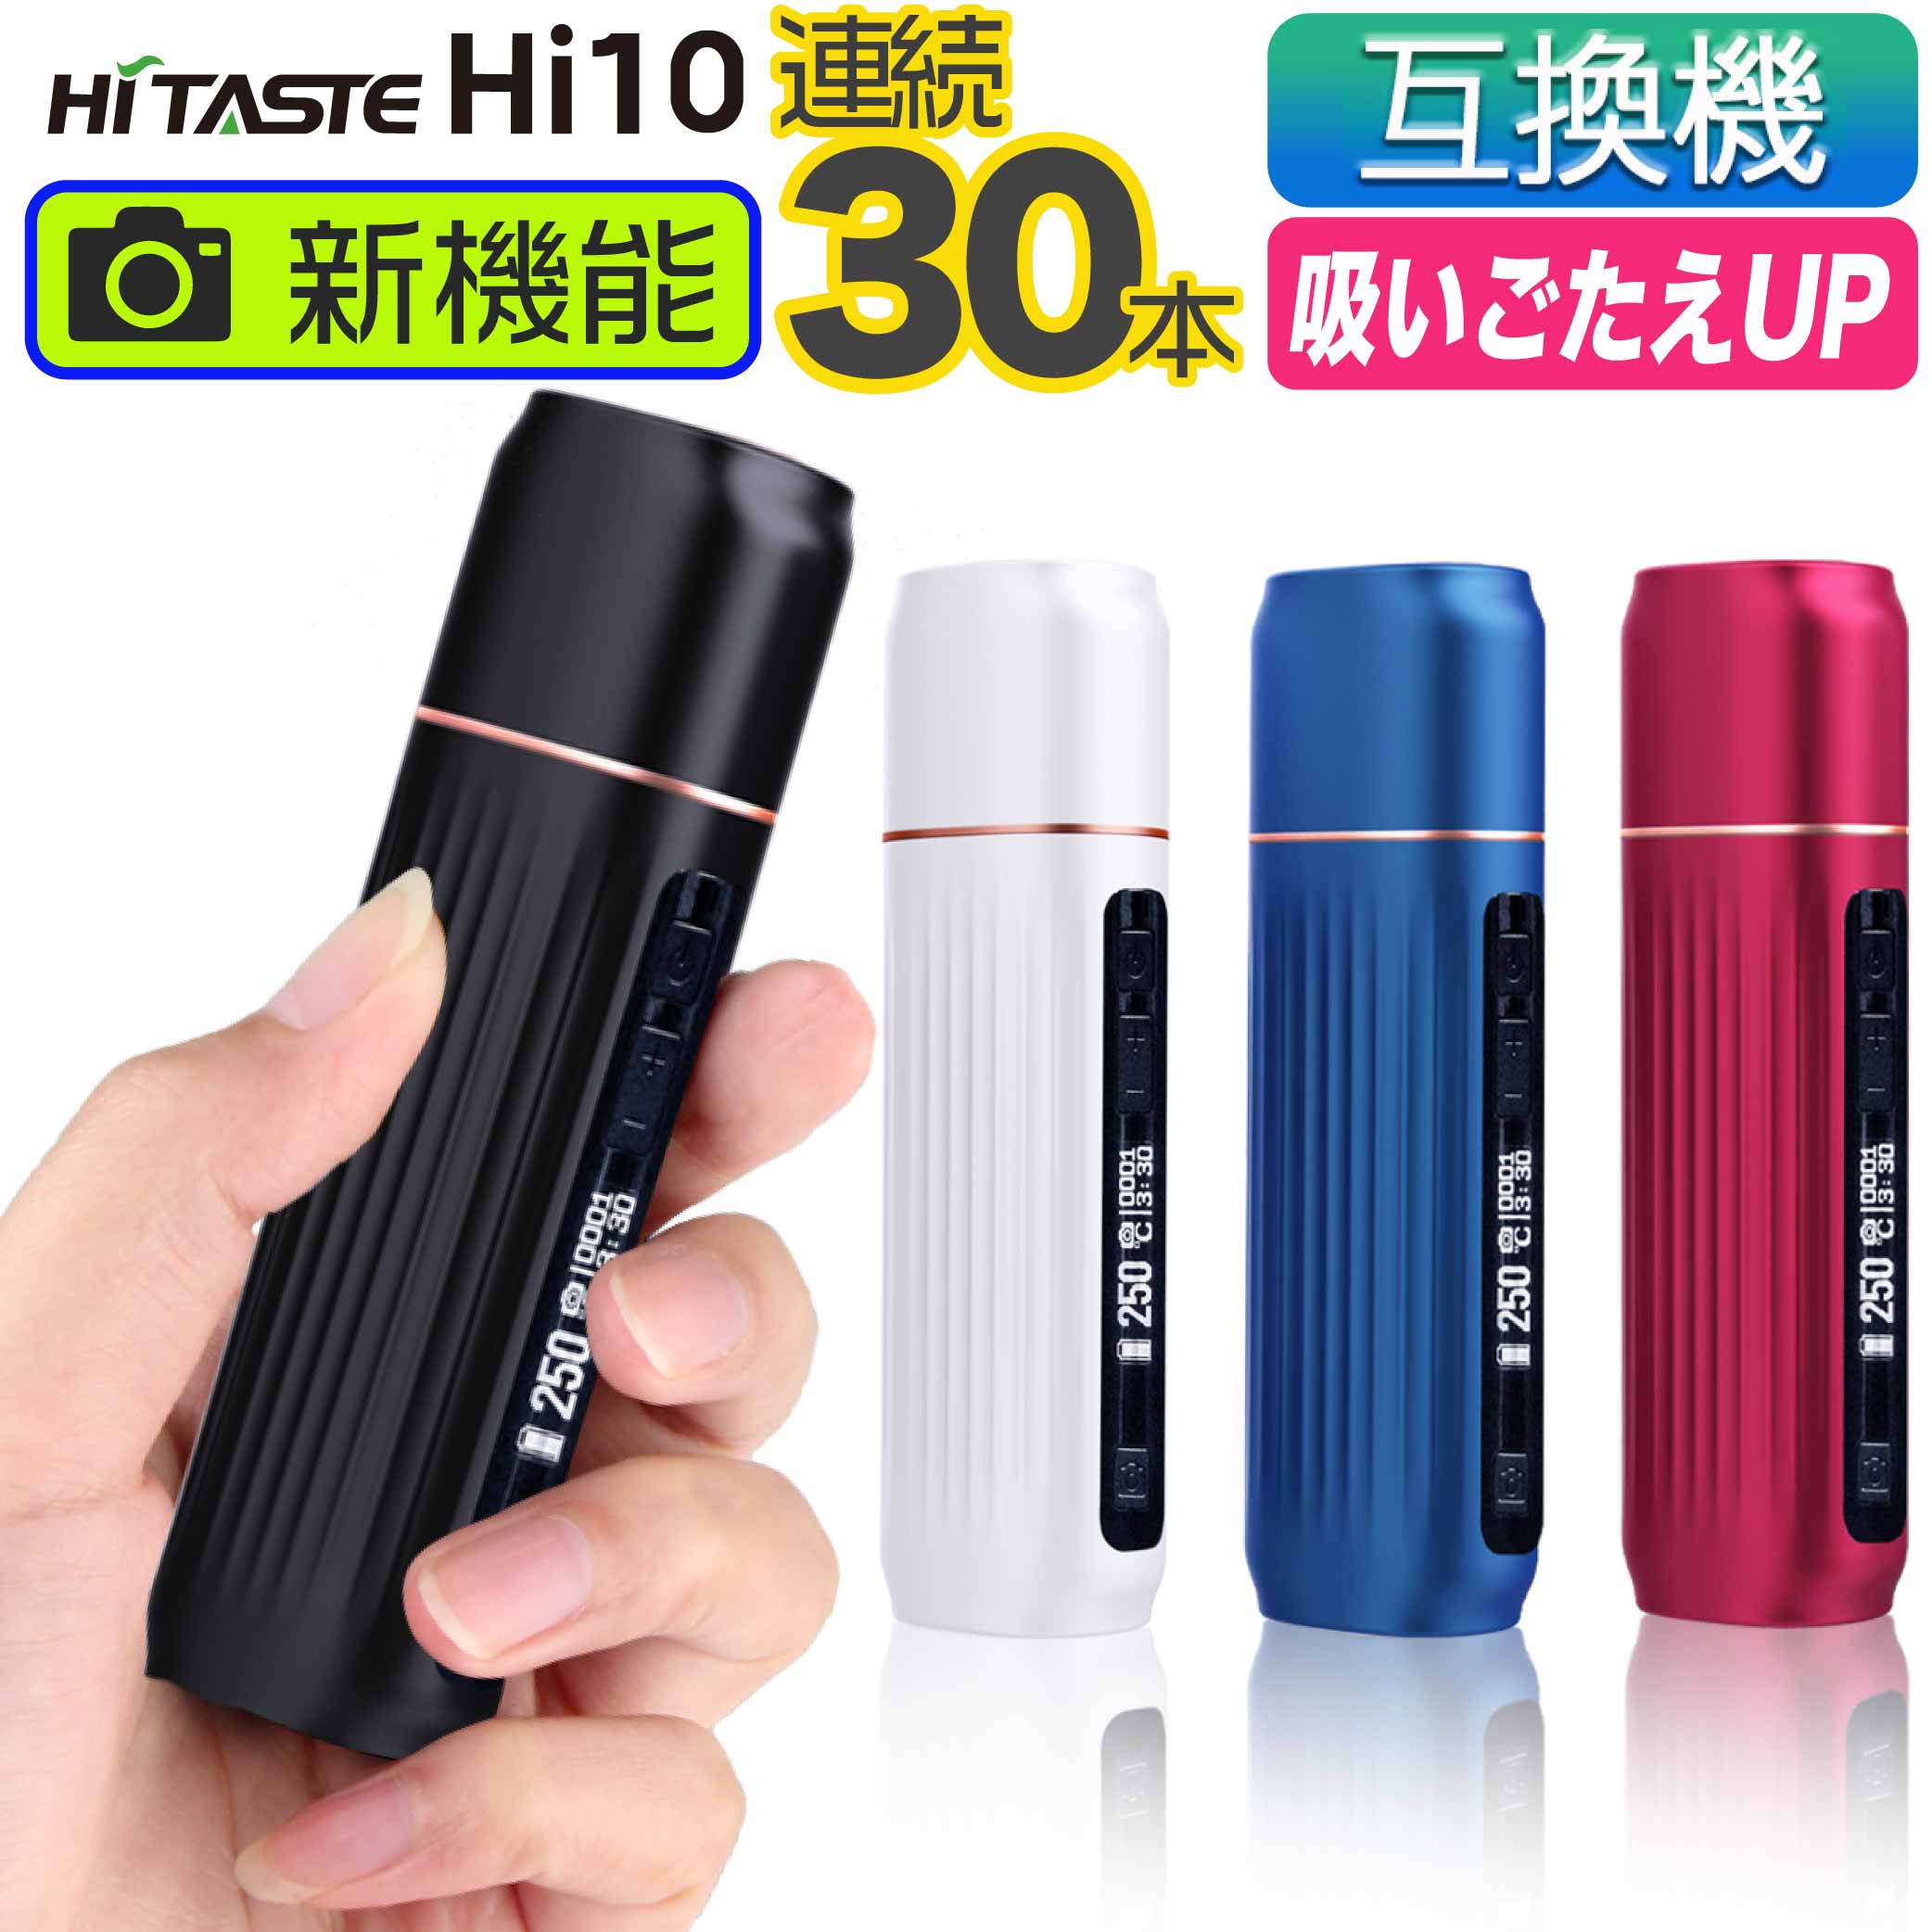 HITASTE Hi10 アイコス互換機 iQOS互換機 本体 加熱式タバコ 加熱式電子タバコ 電子タバコ ハイテイスト ハイテン S9 Bluetooth セルフィー 機能 連続 吸い 使用 チェーンスモーク 振動 最新 …